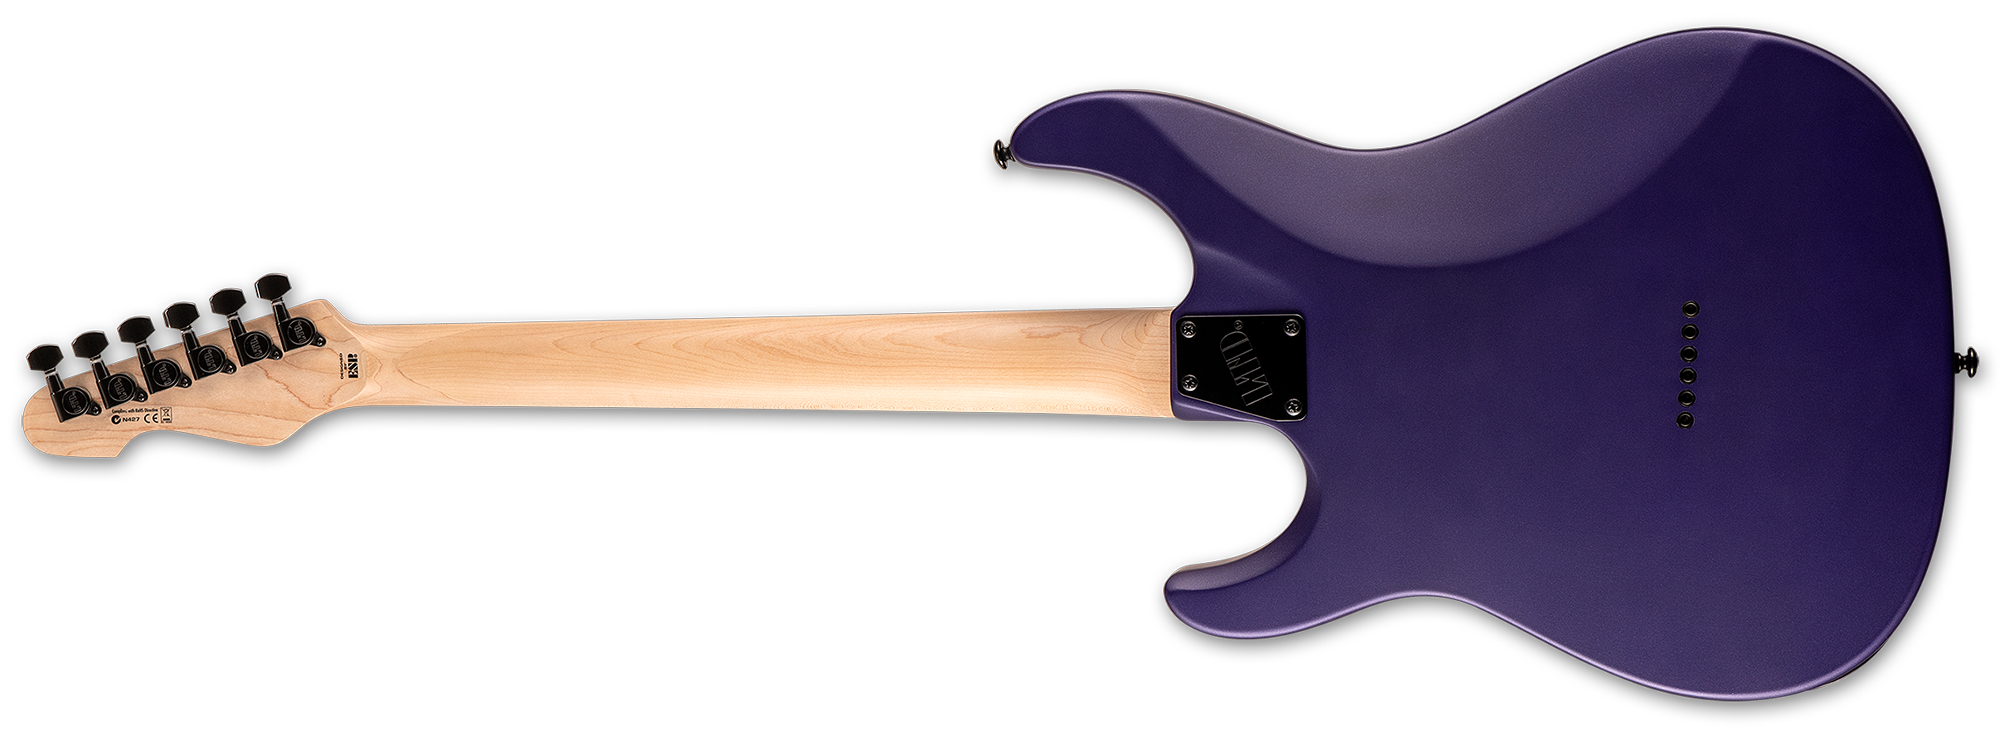 Ltd Sn-200ht Hh Ht Mn - Dark Metallic Purple Satin - Guitarra eléctrica con forma de str. - Variation 2